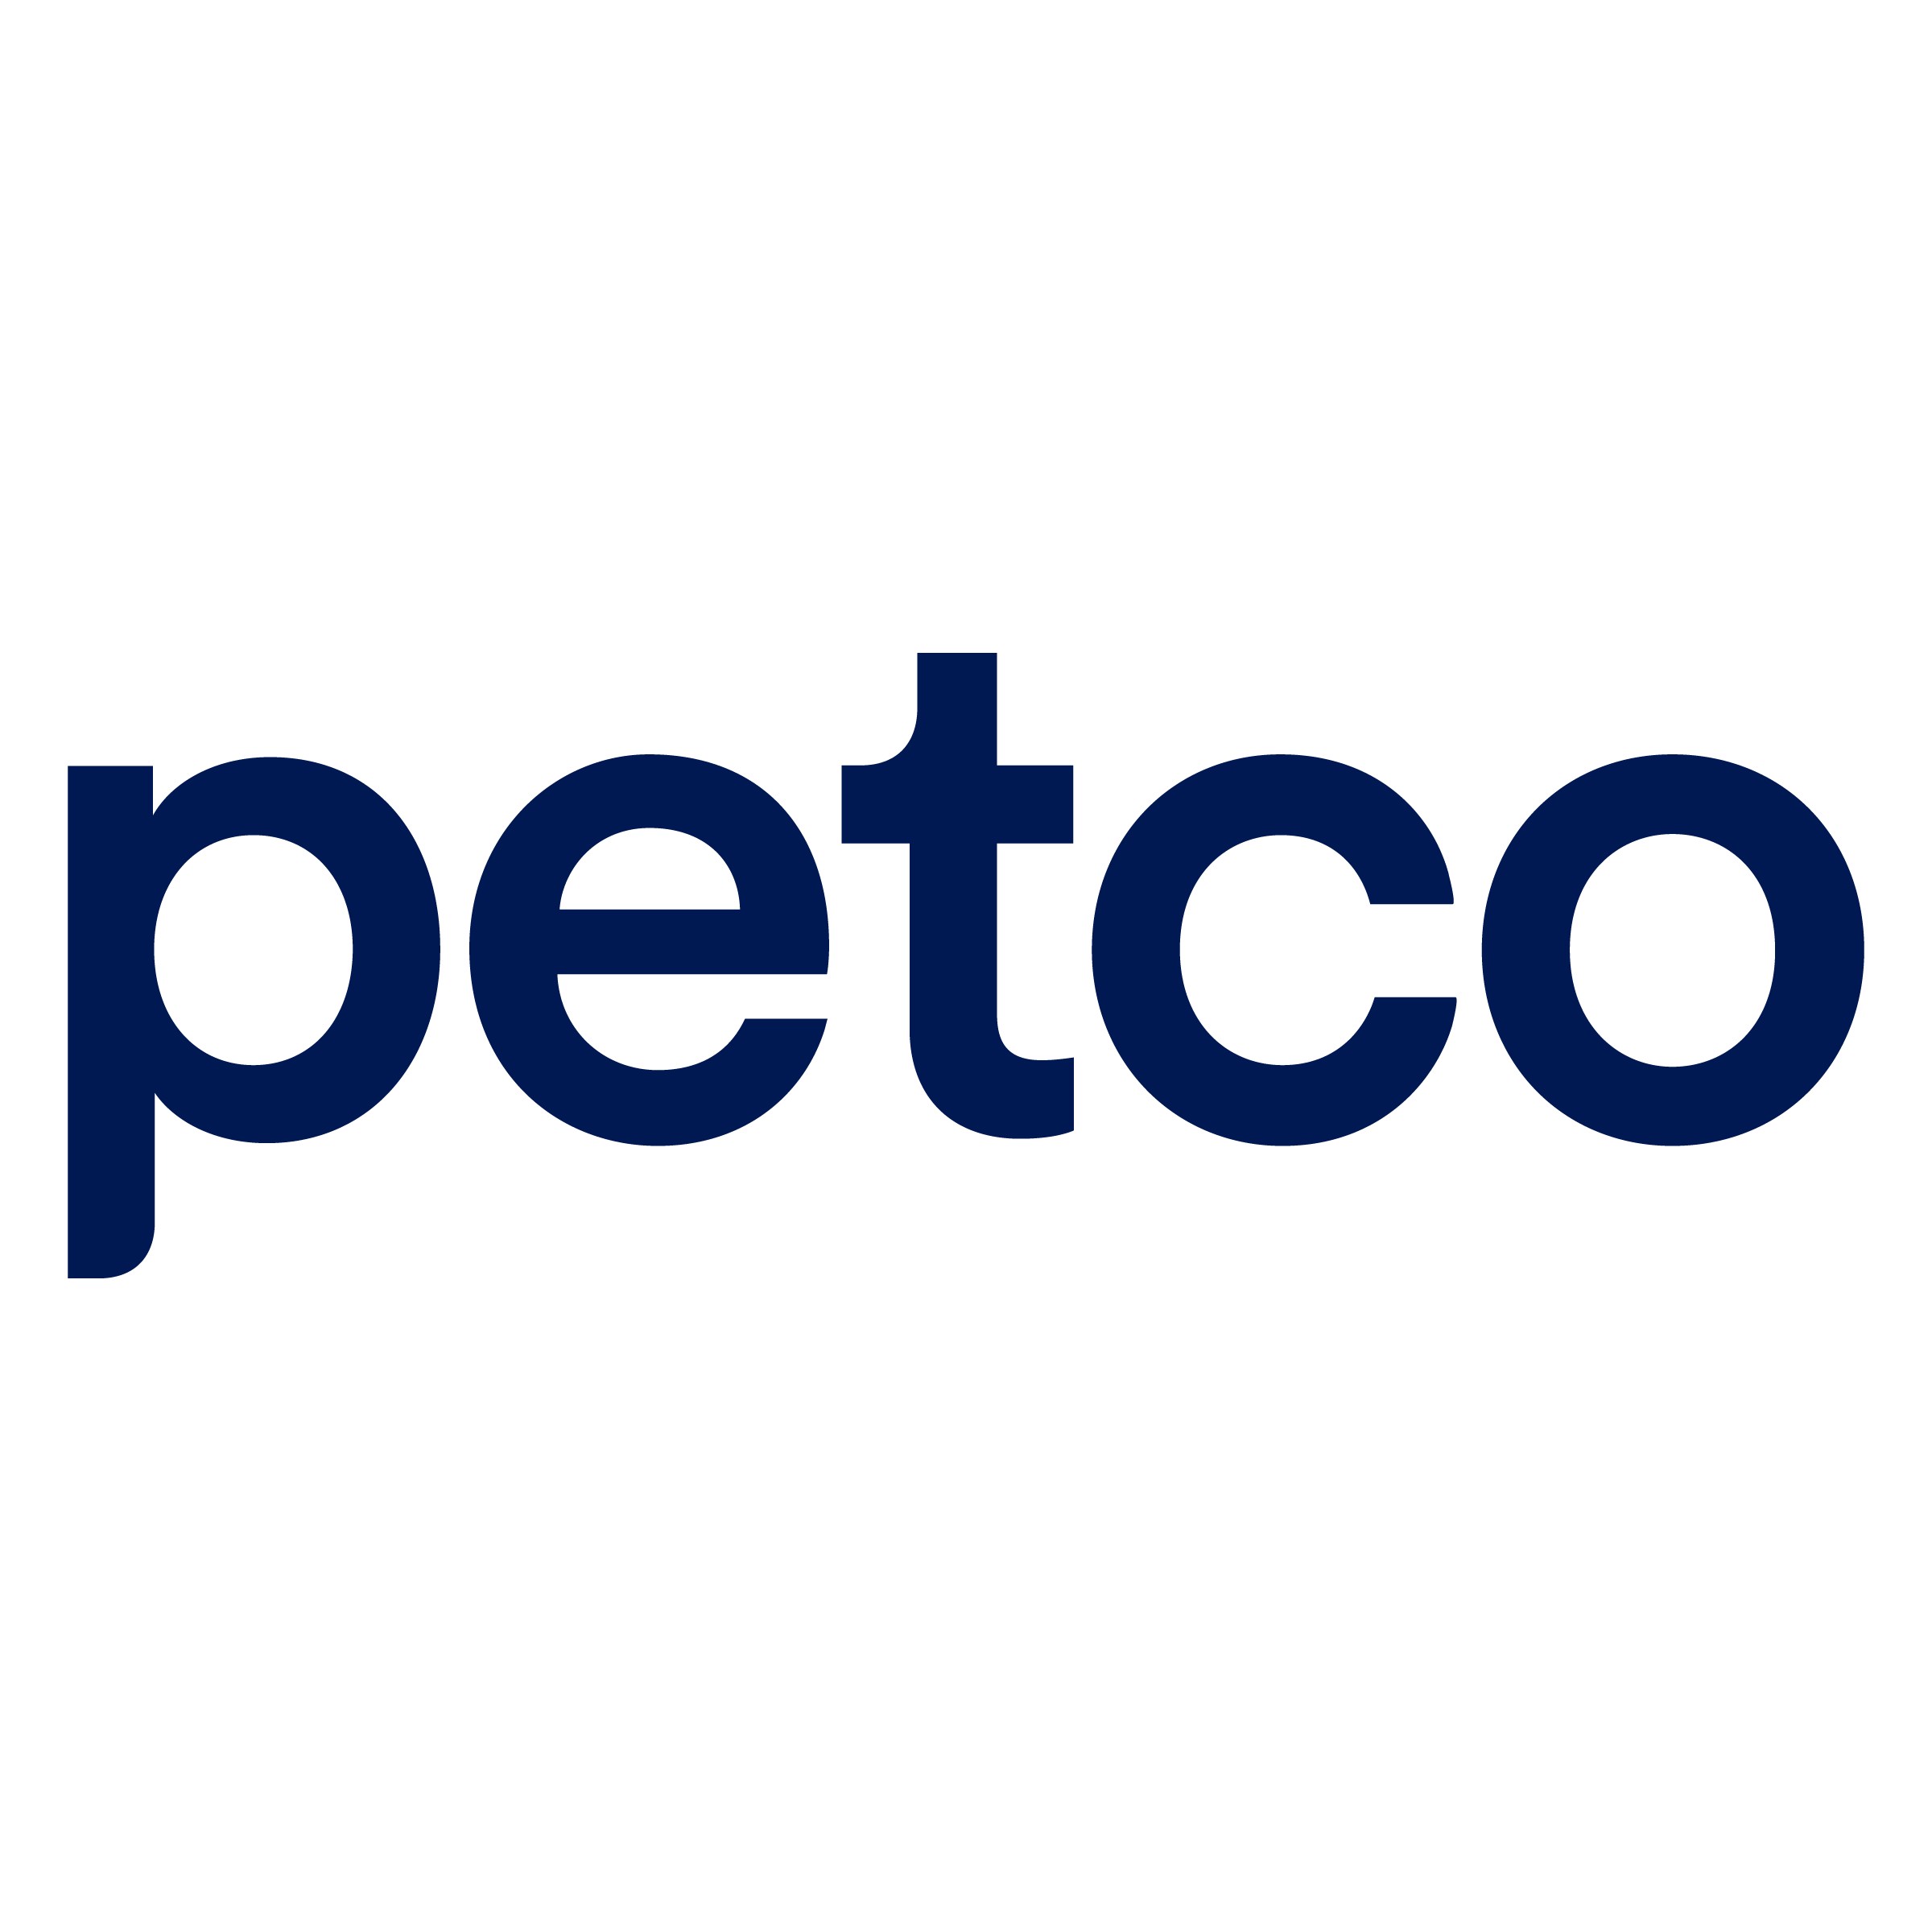 Petco_logo.png